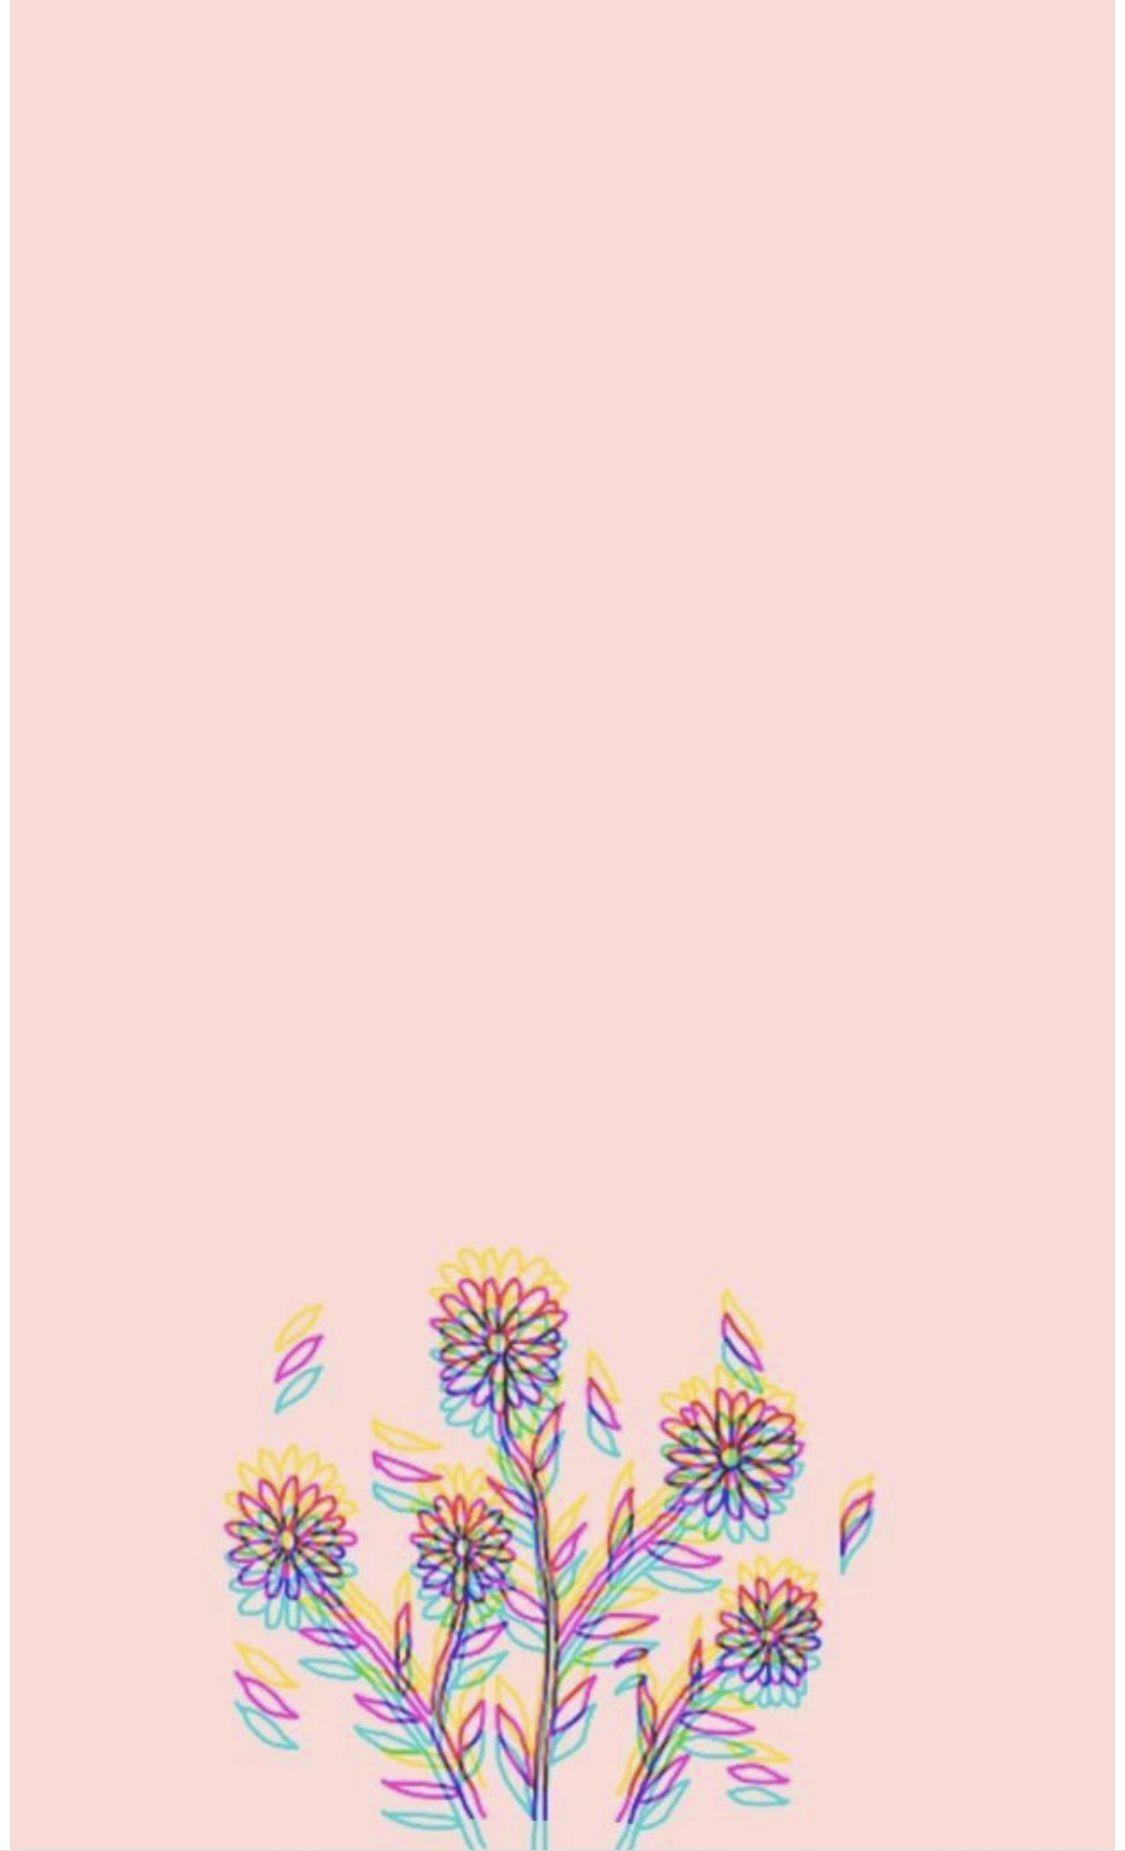 Aesthetic Cute Pastel iPhone Wallpapers - Top Free Aesthetic Cute